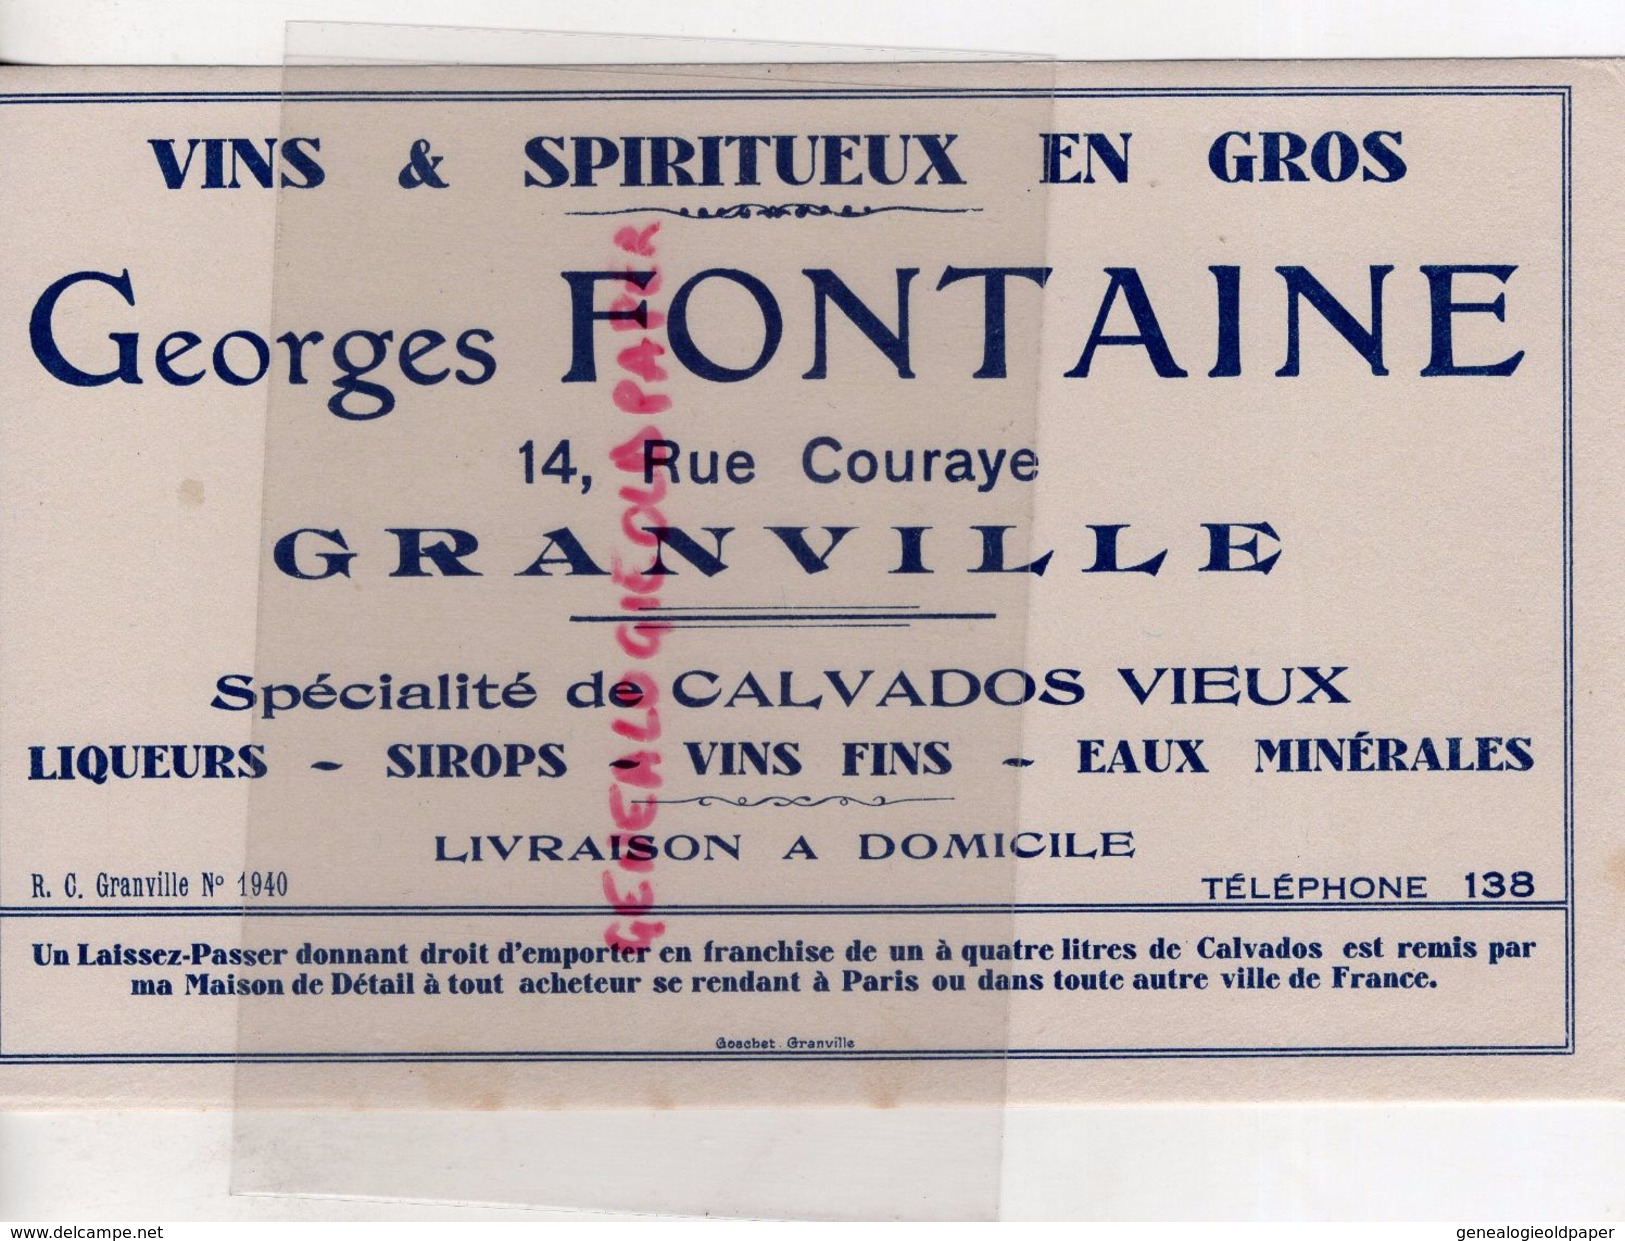 50- GRANVILLE- BUVARD GEORGES FONTAINE-VINS SPIRITUEUX-14 RUE COURAYE- CALVADOS - Lebensmittel